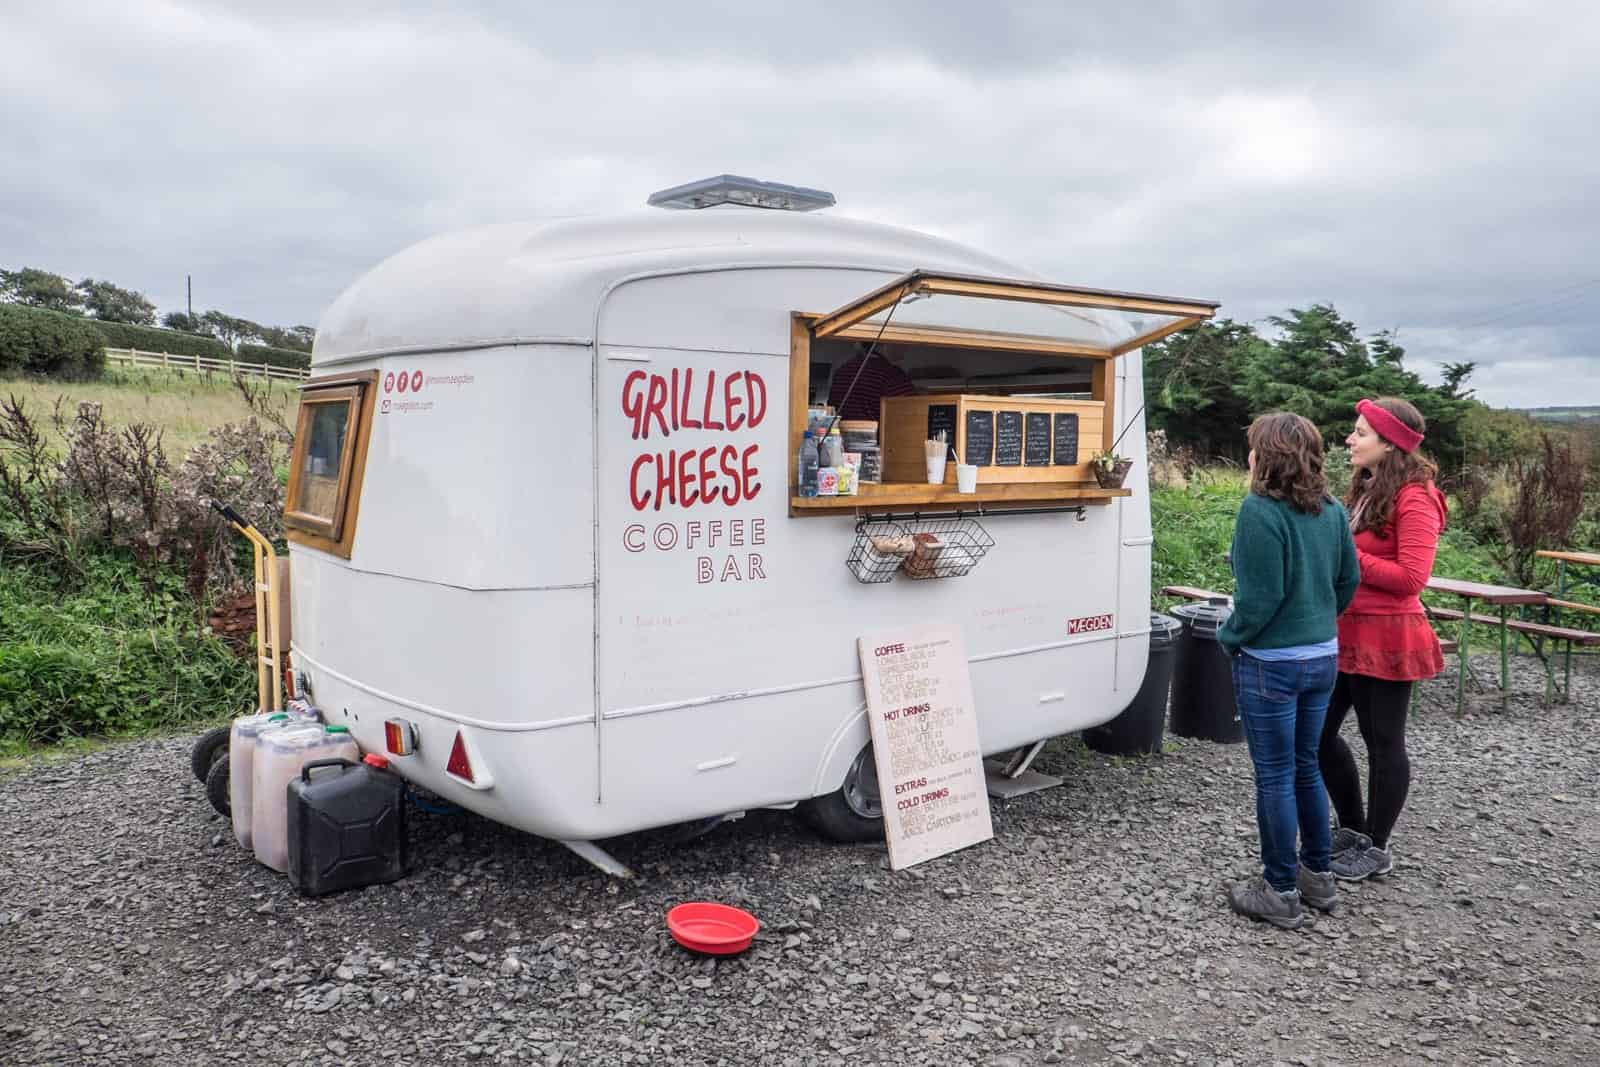 Grilled cheese toastie caravan near Giants Causeway Northern Ireland